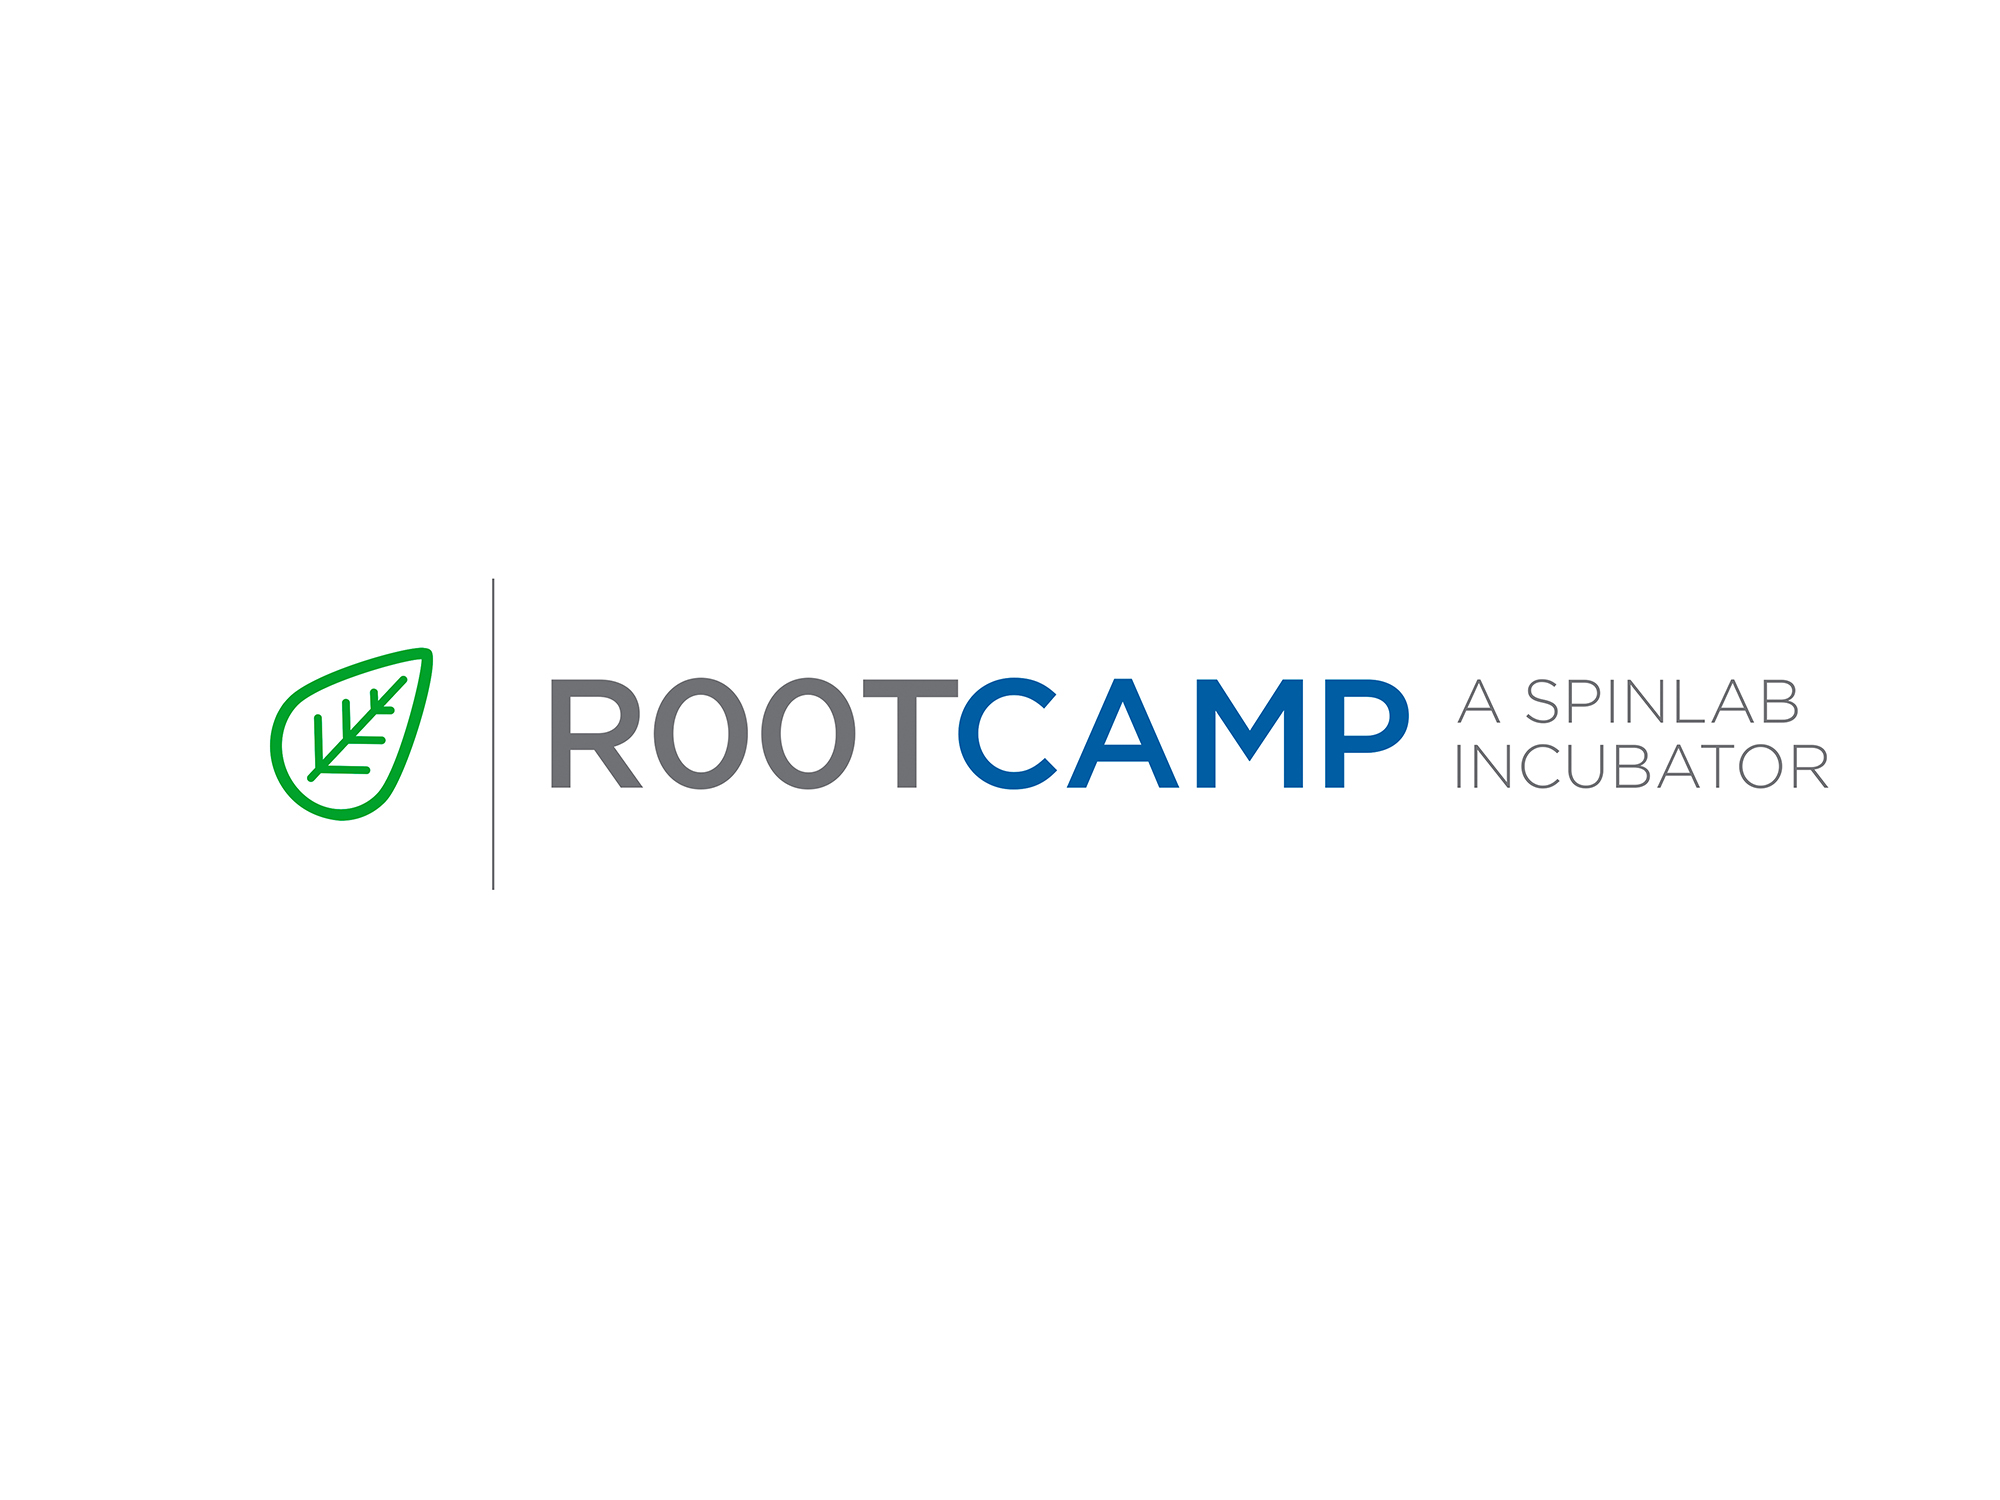 Das Rootcamp-Logo